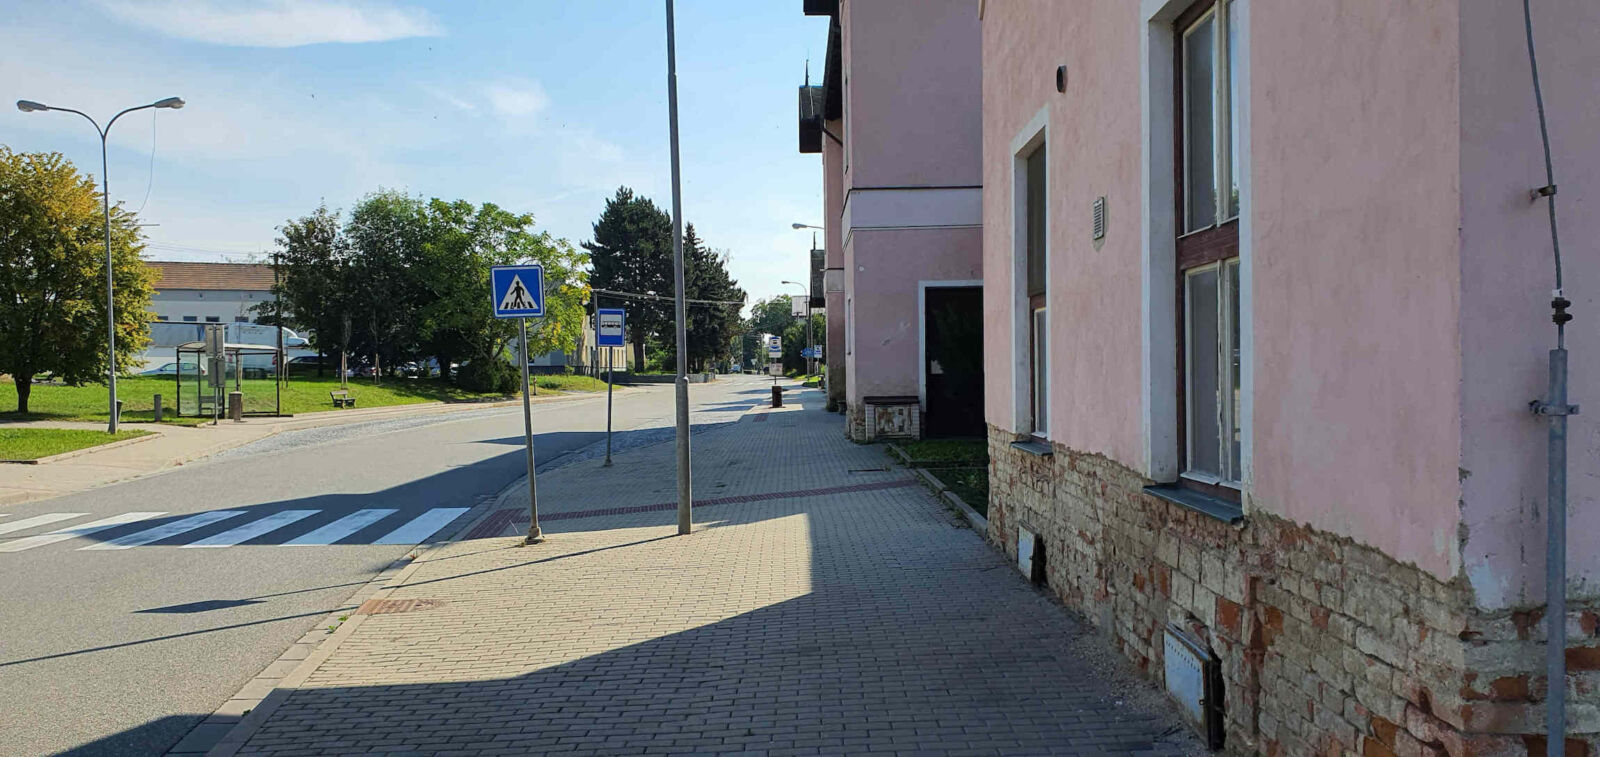 Rekonstrukce žel. stanice Sokolnice-Telnice